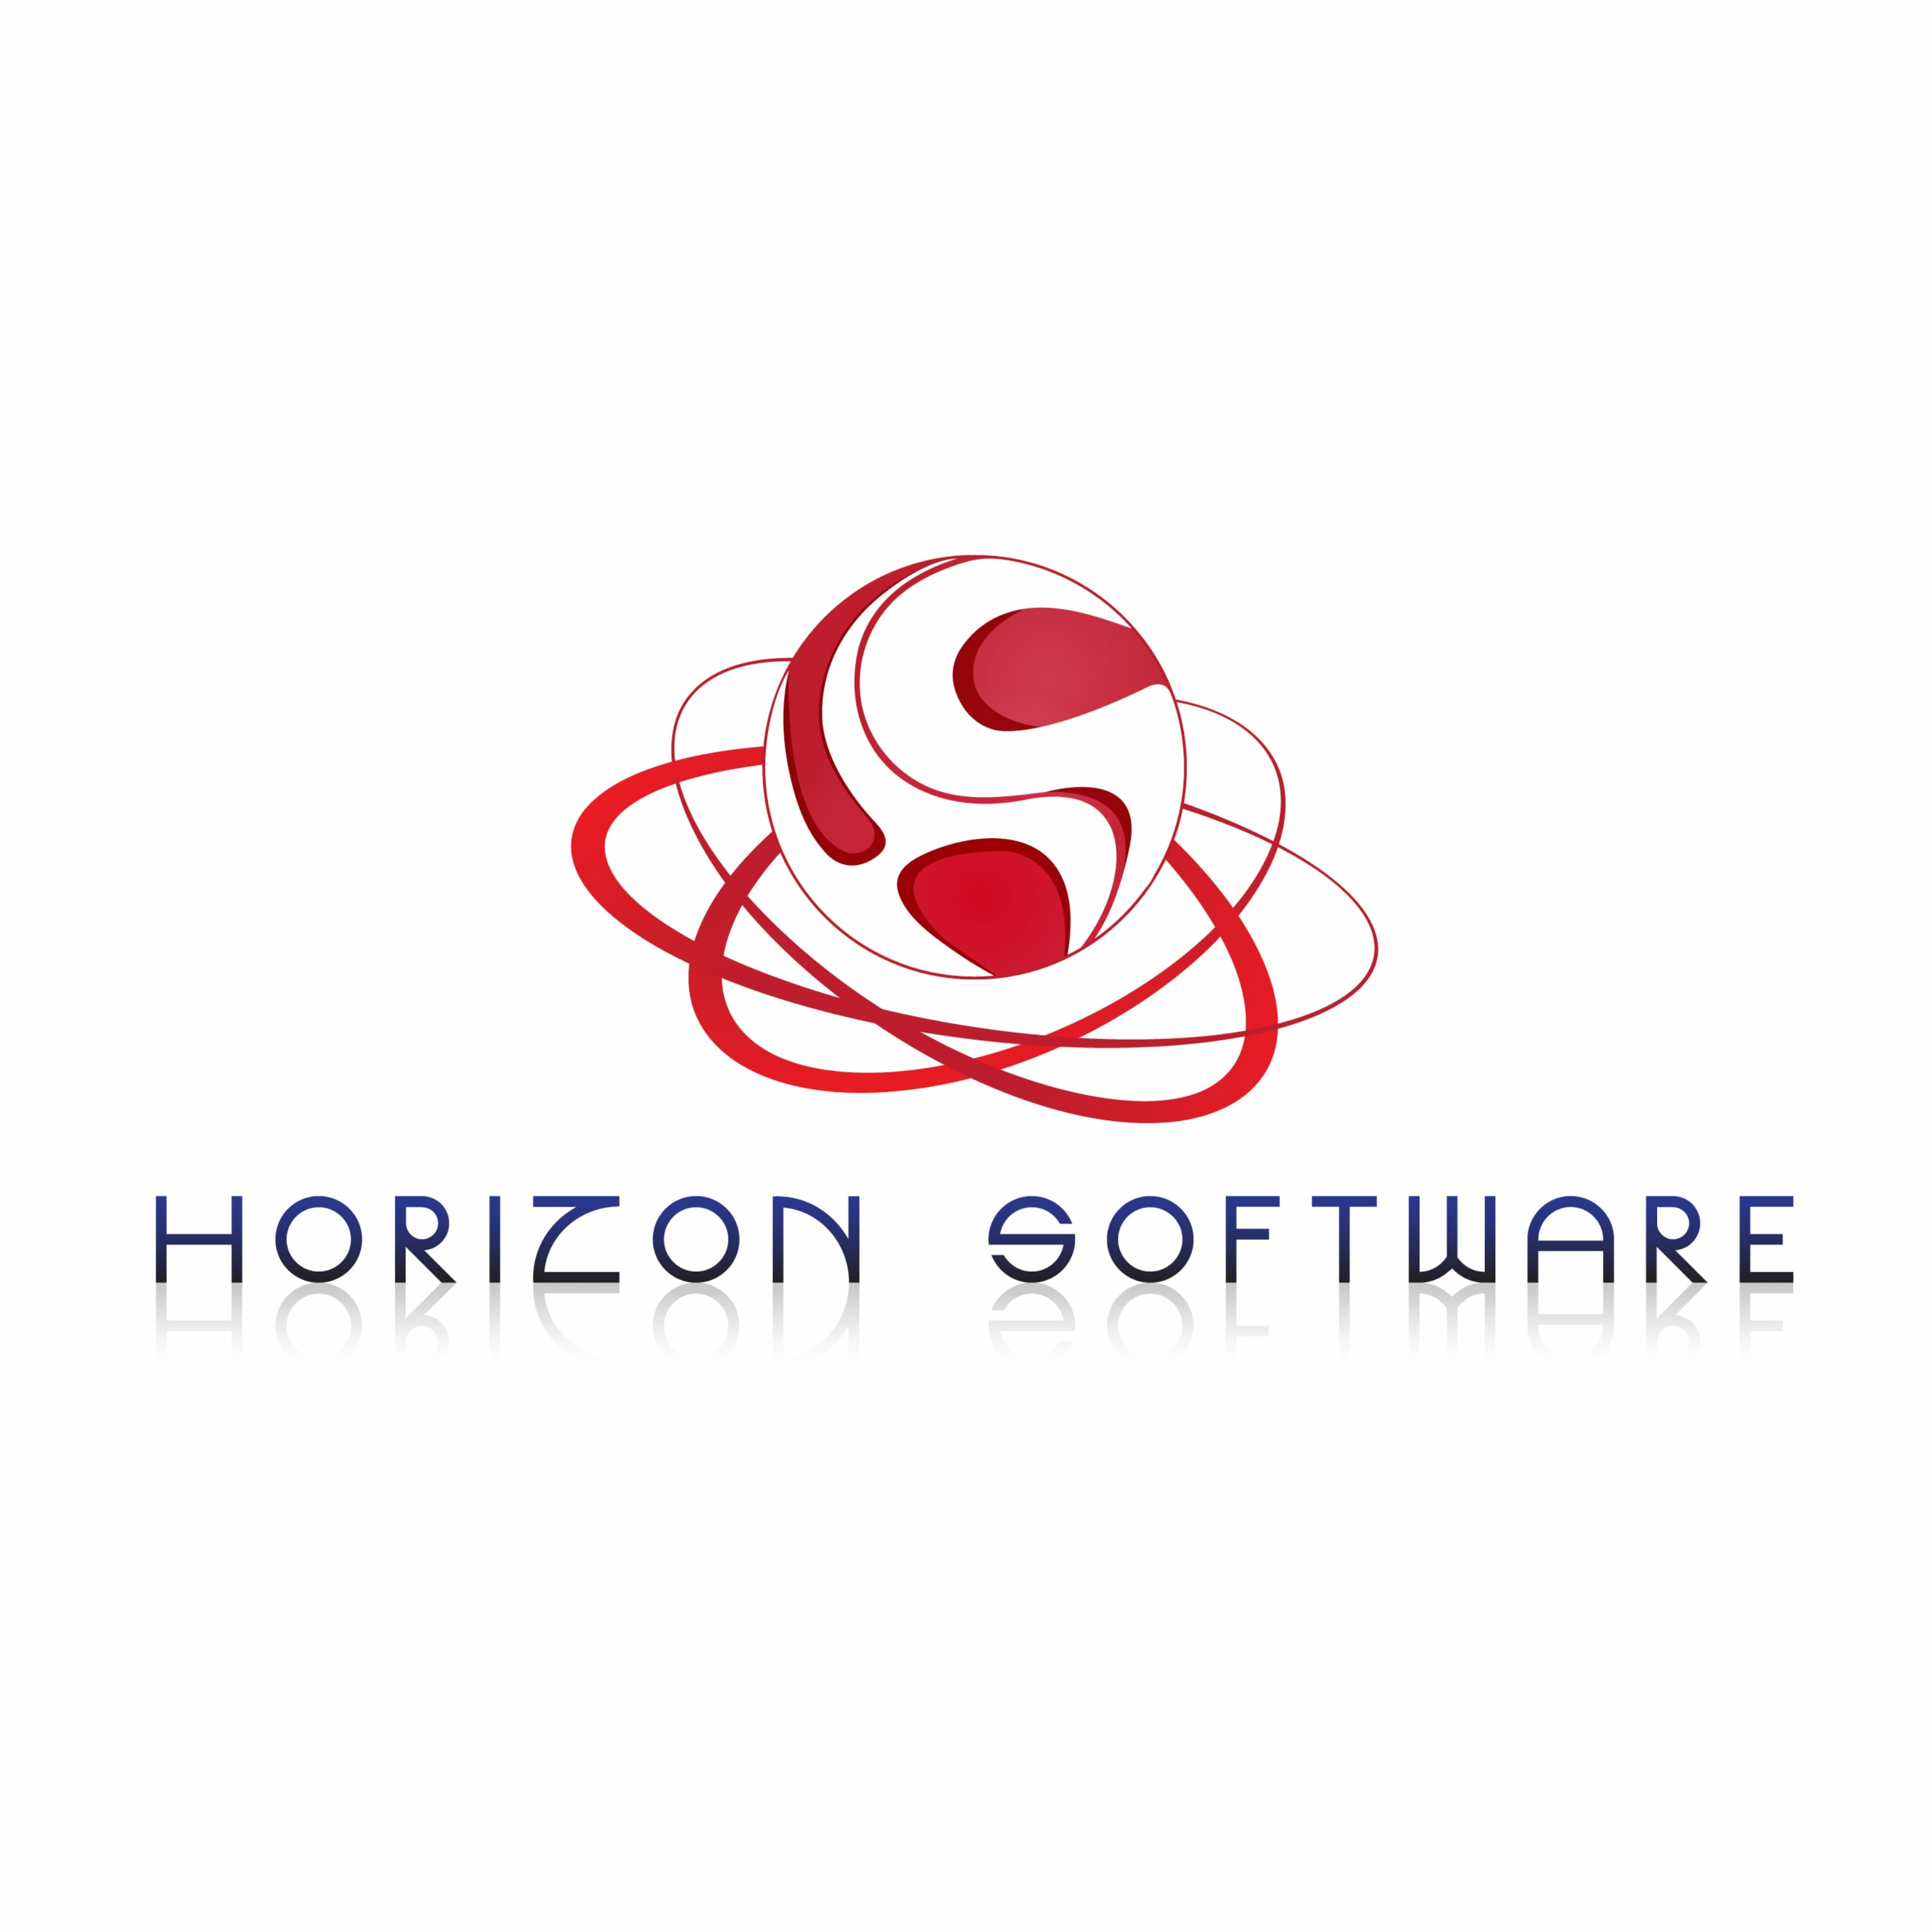 Horizon Software Pte Ltd's logo